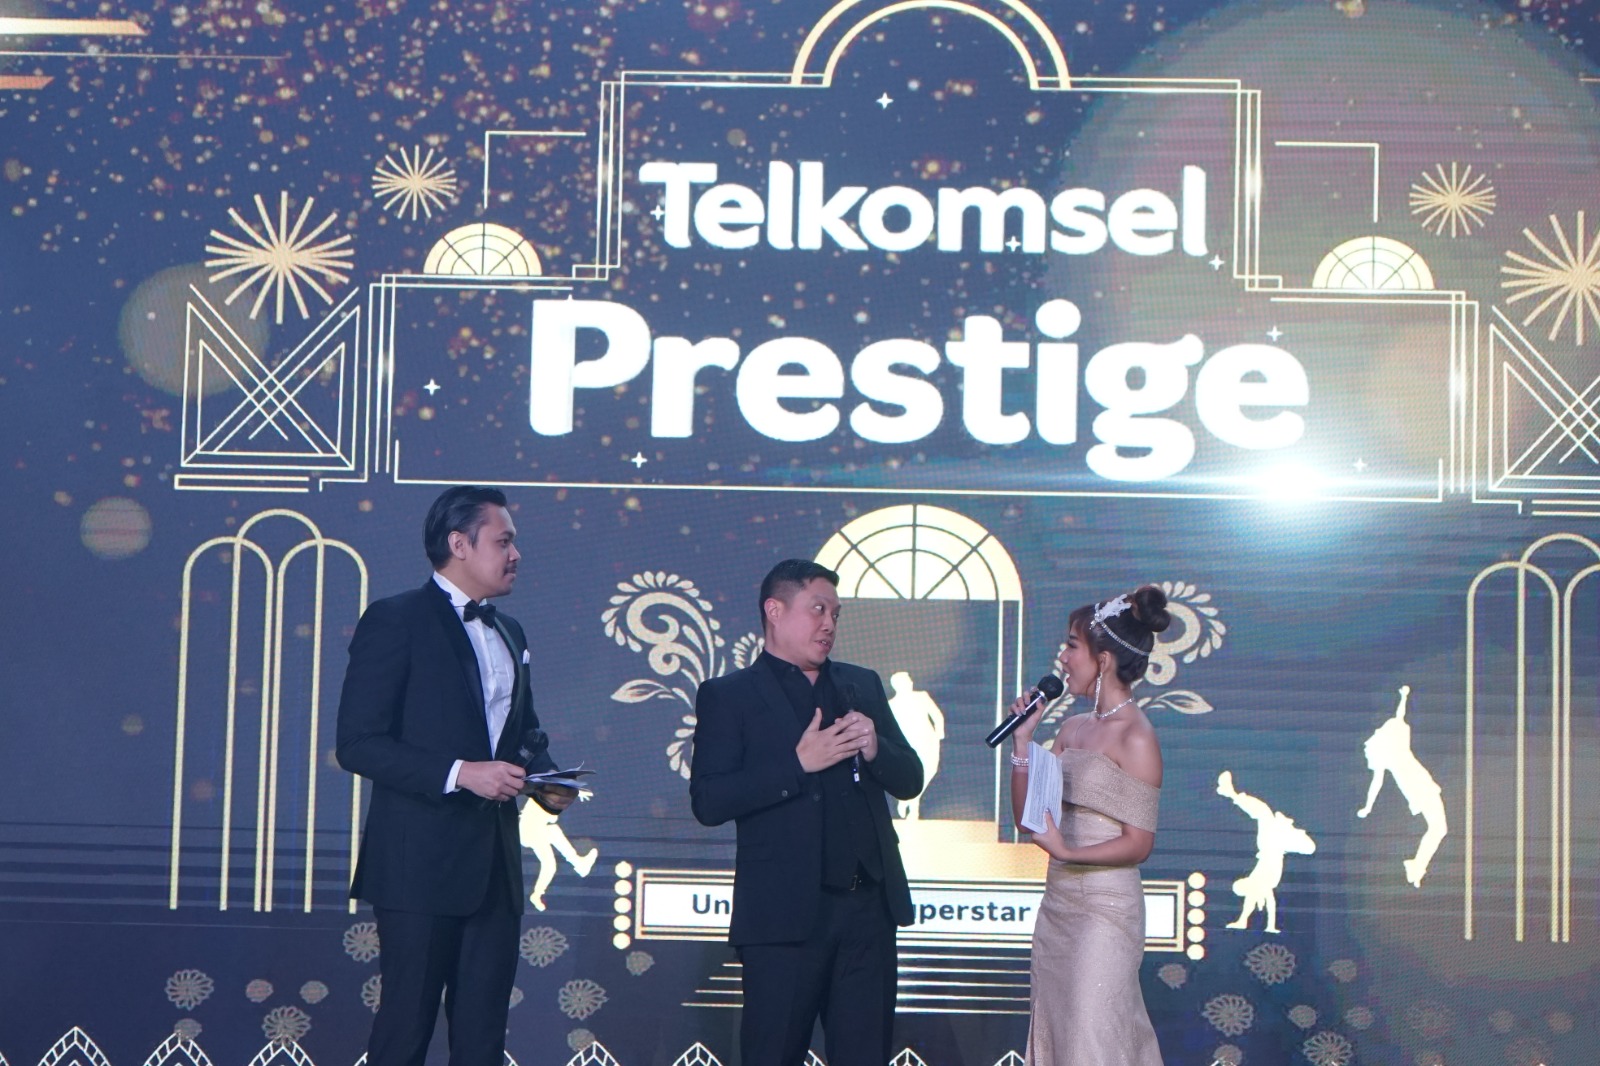 Telkomsel meluncurkan program loyalitas terbaru, yakni ‘Telkomsel Prestige’ yang dirangkaikan dengan acara Customer Gathering di empat kota salah satunya di Makassar pada Jumat (16/6). Acara ini dihadirkan sebagai bentuk apresiasi sejumlah pelanggan di kategori Diamond yang telah dengan setia dan terus percaya menggunakan beragam produk dan unggulan Telkomsel secara konsisten.